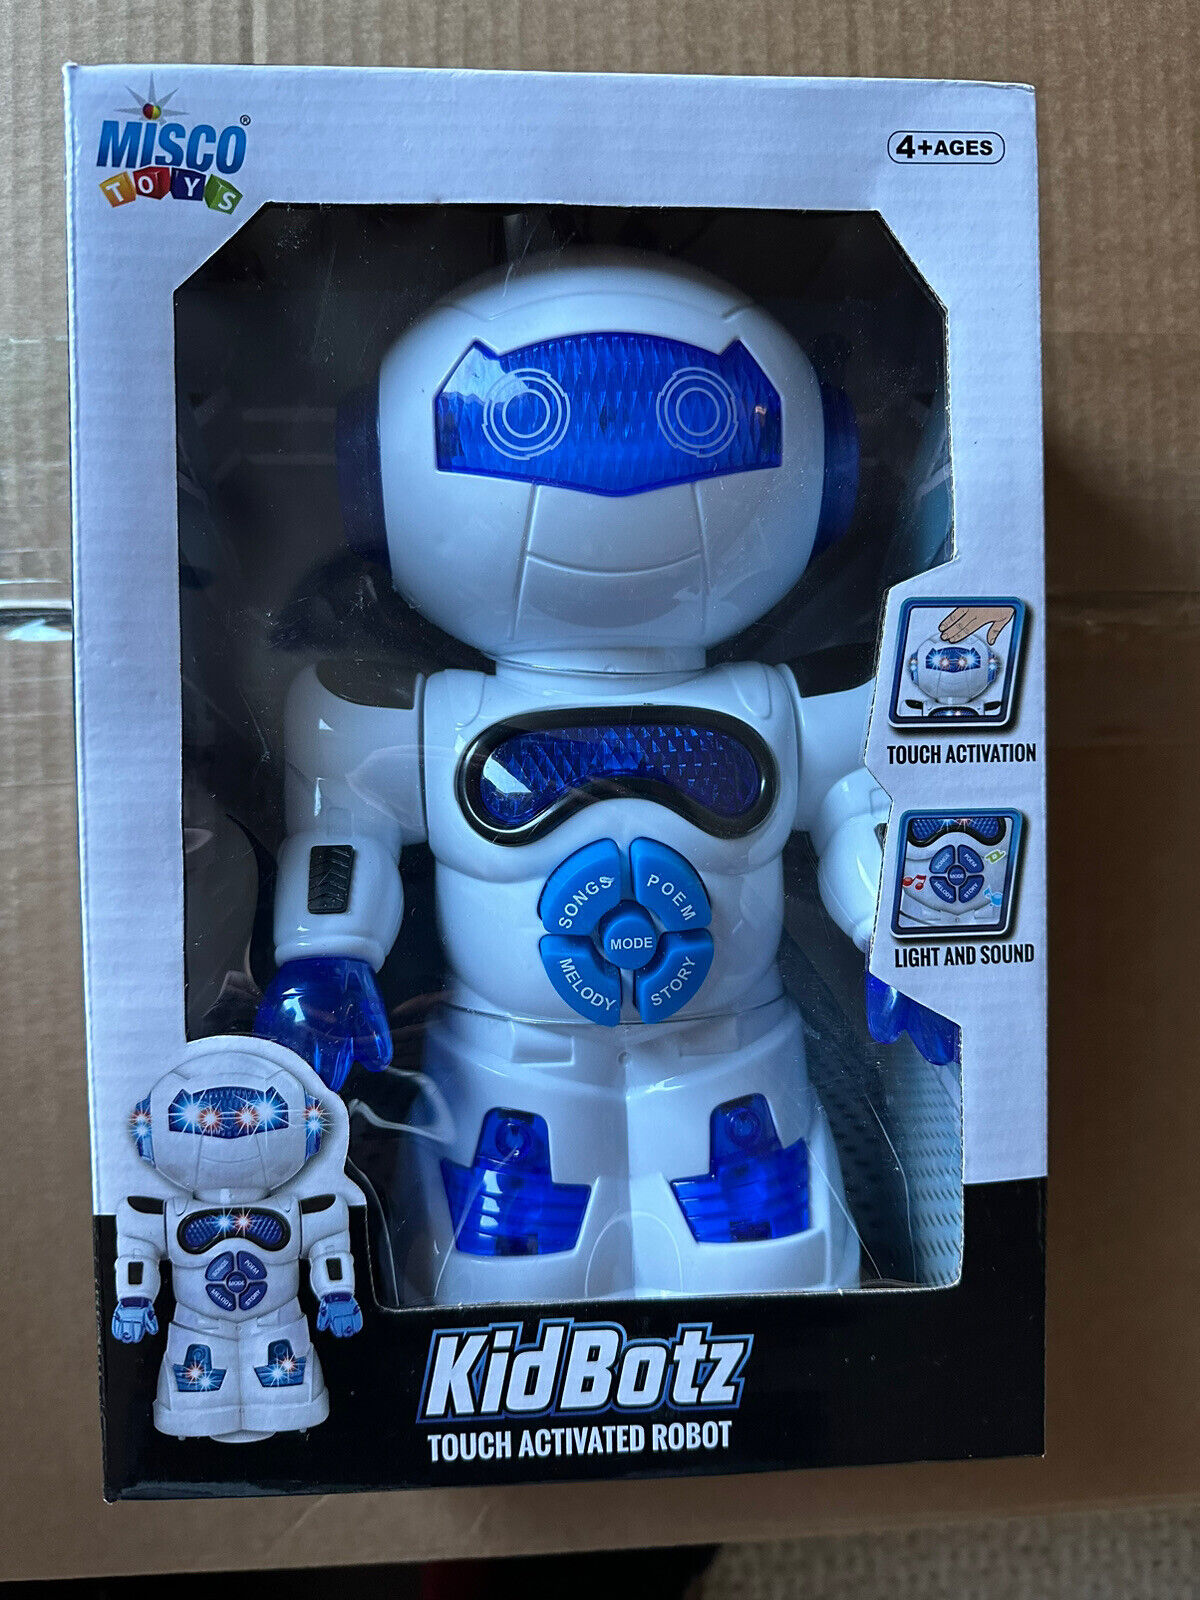 Mosco Kidbotz Touch Activated Robot